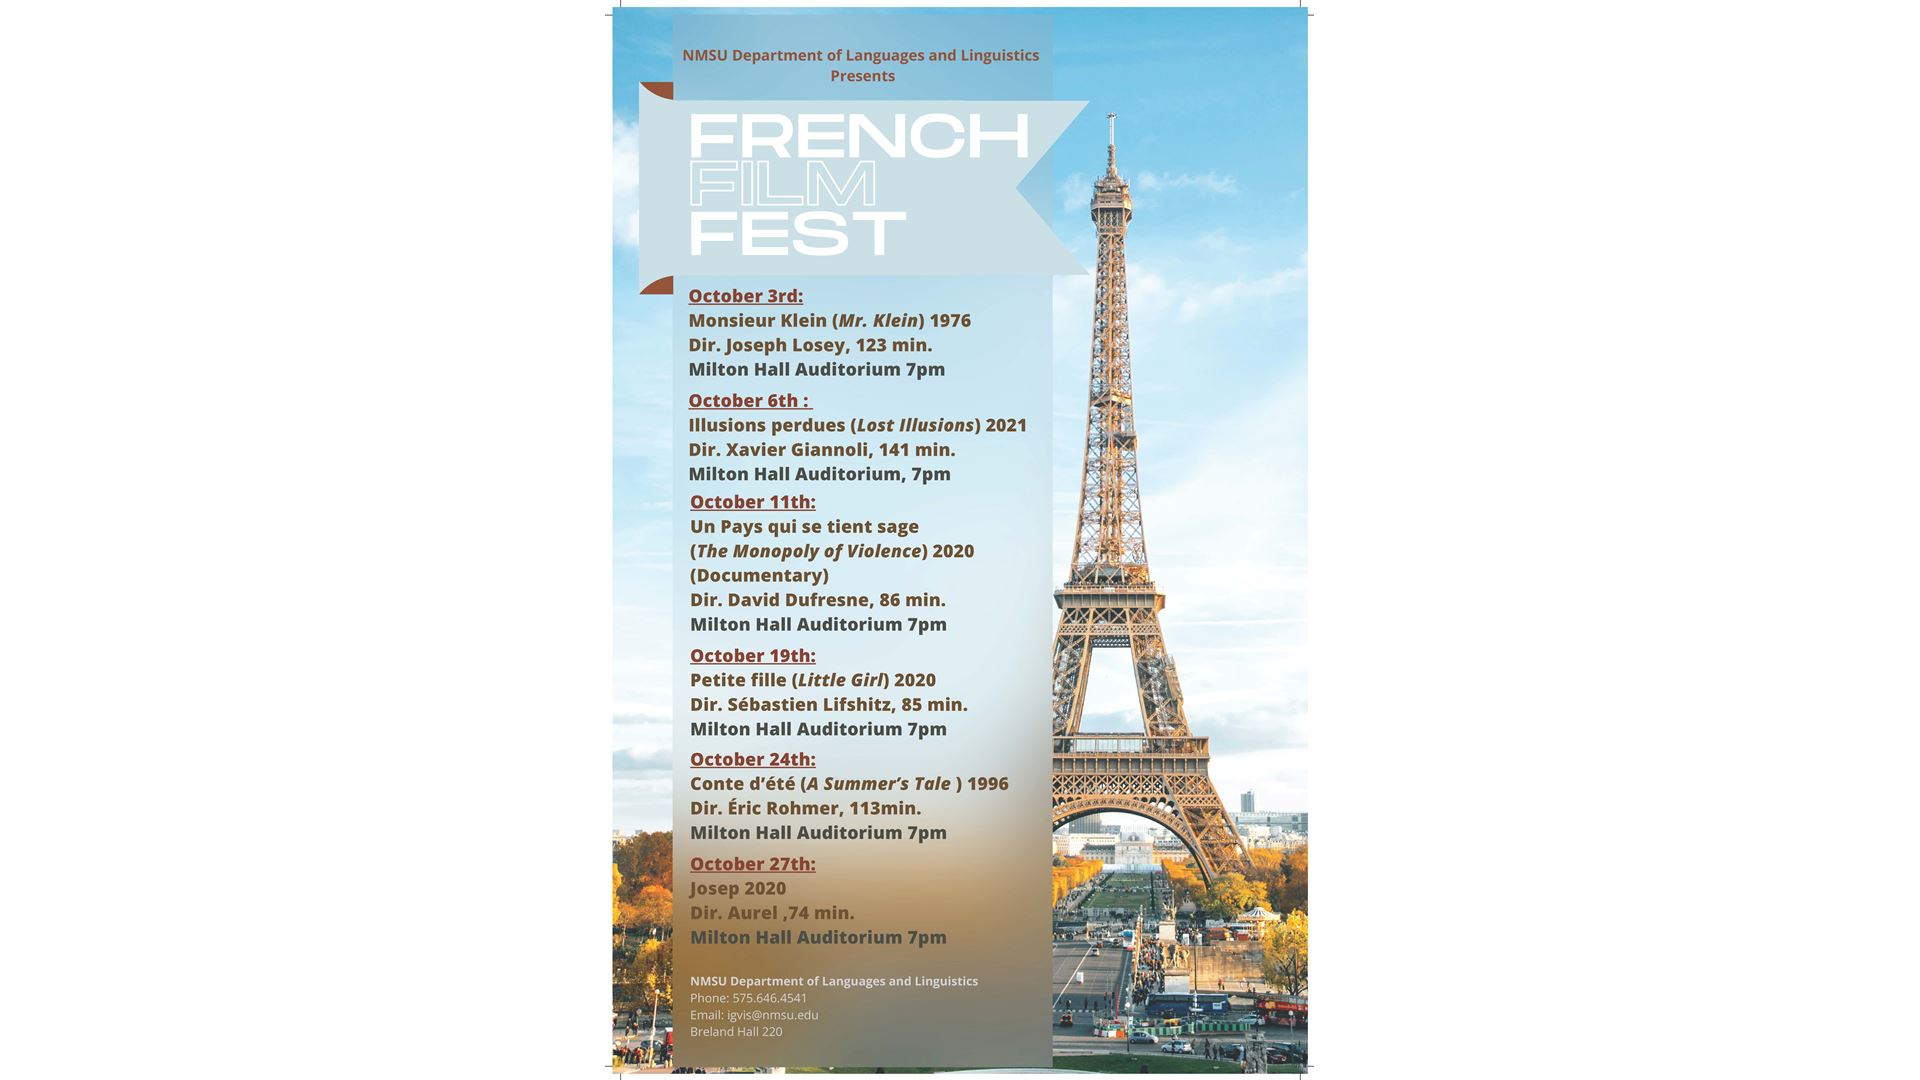 NMSU to host French Film Fest Oct. 3-27